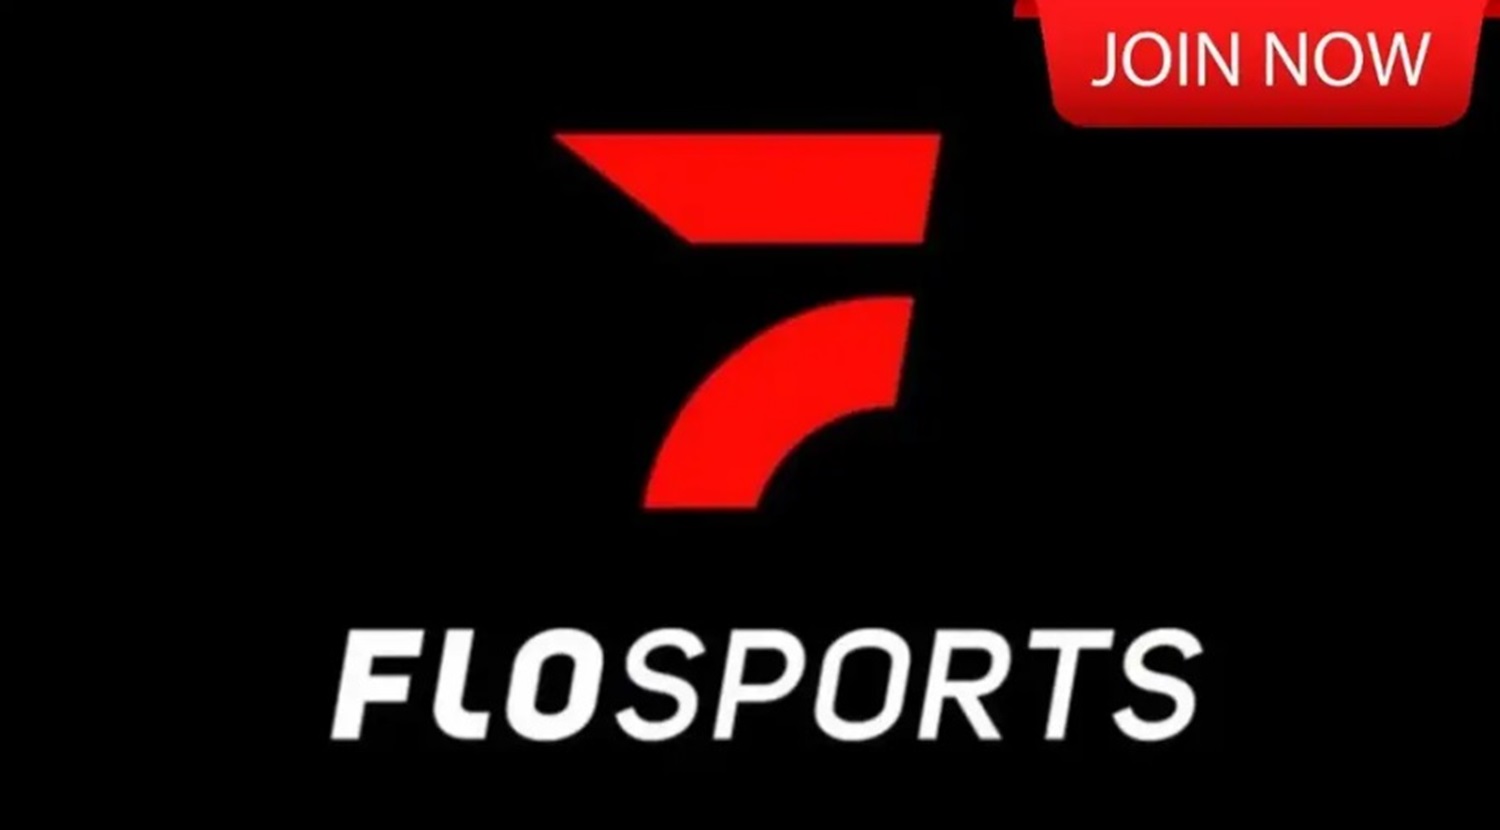 flosports join now